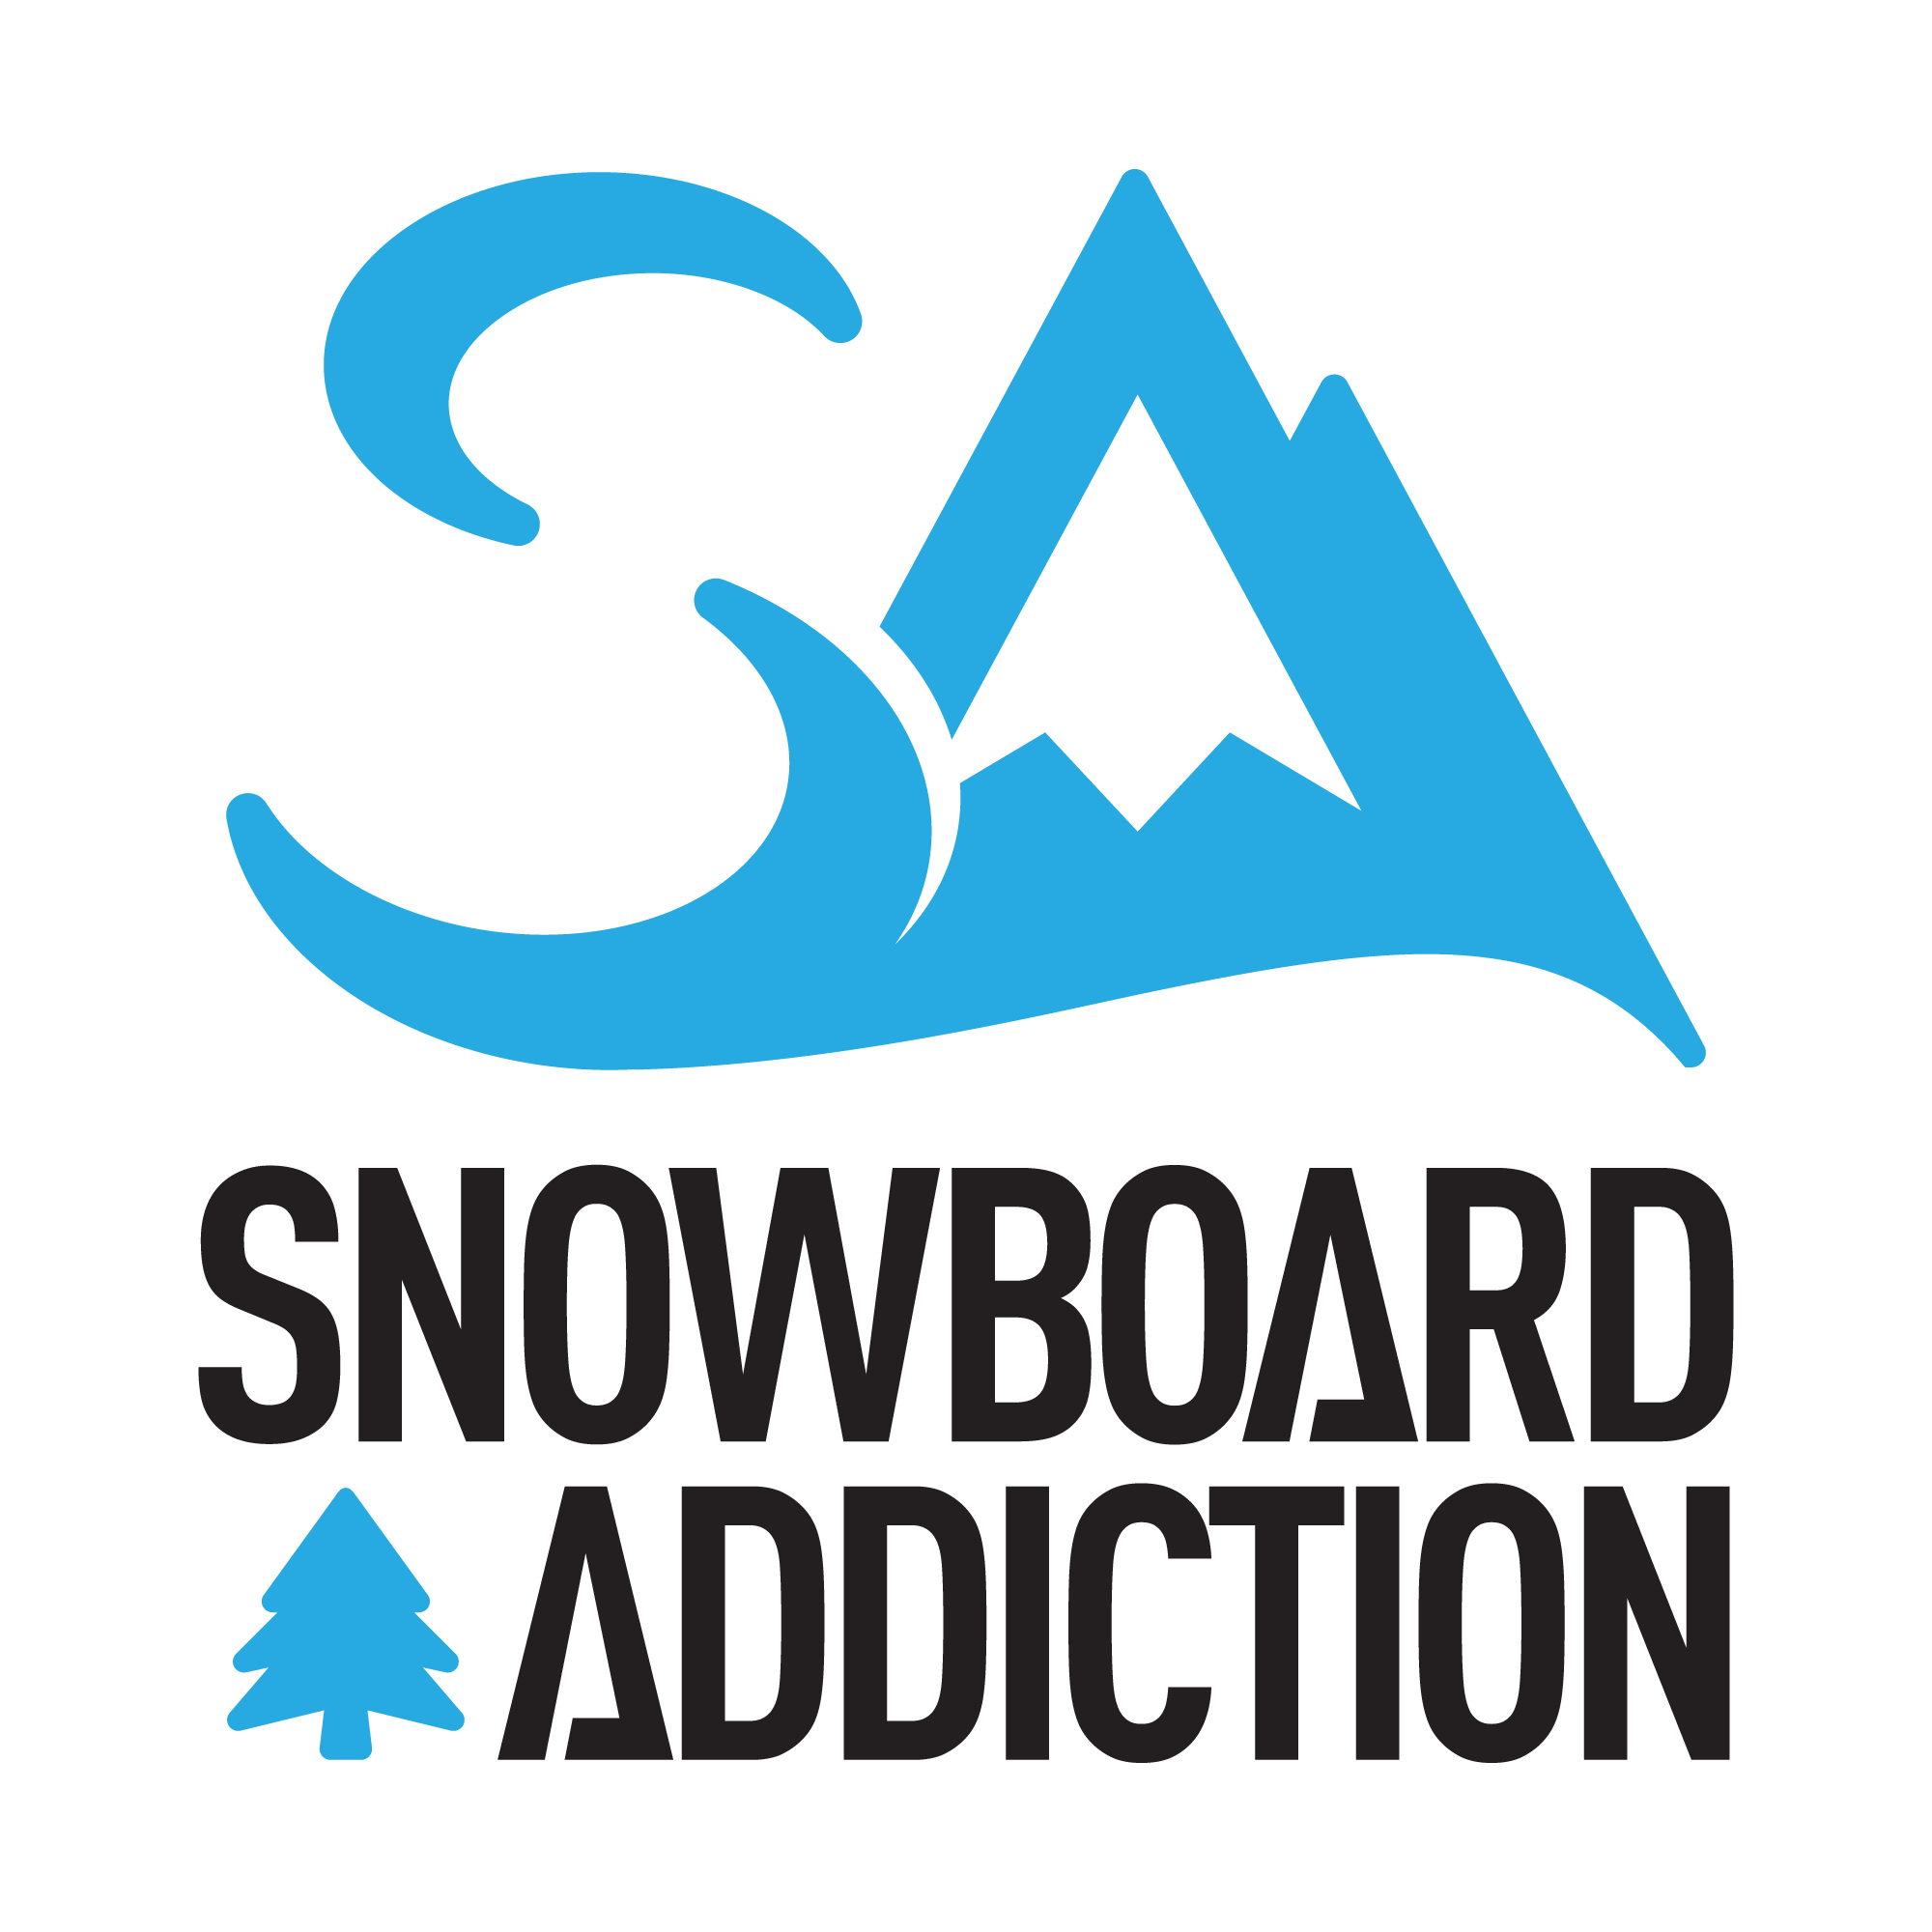 (c) Snowboardaddiction.com